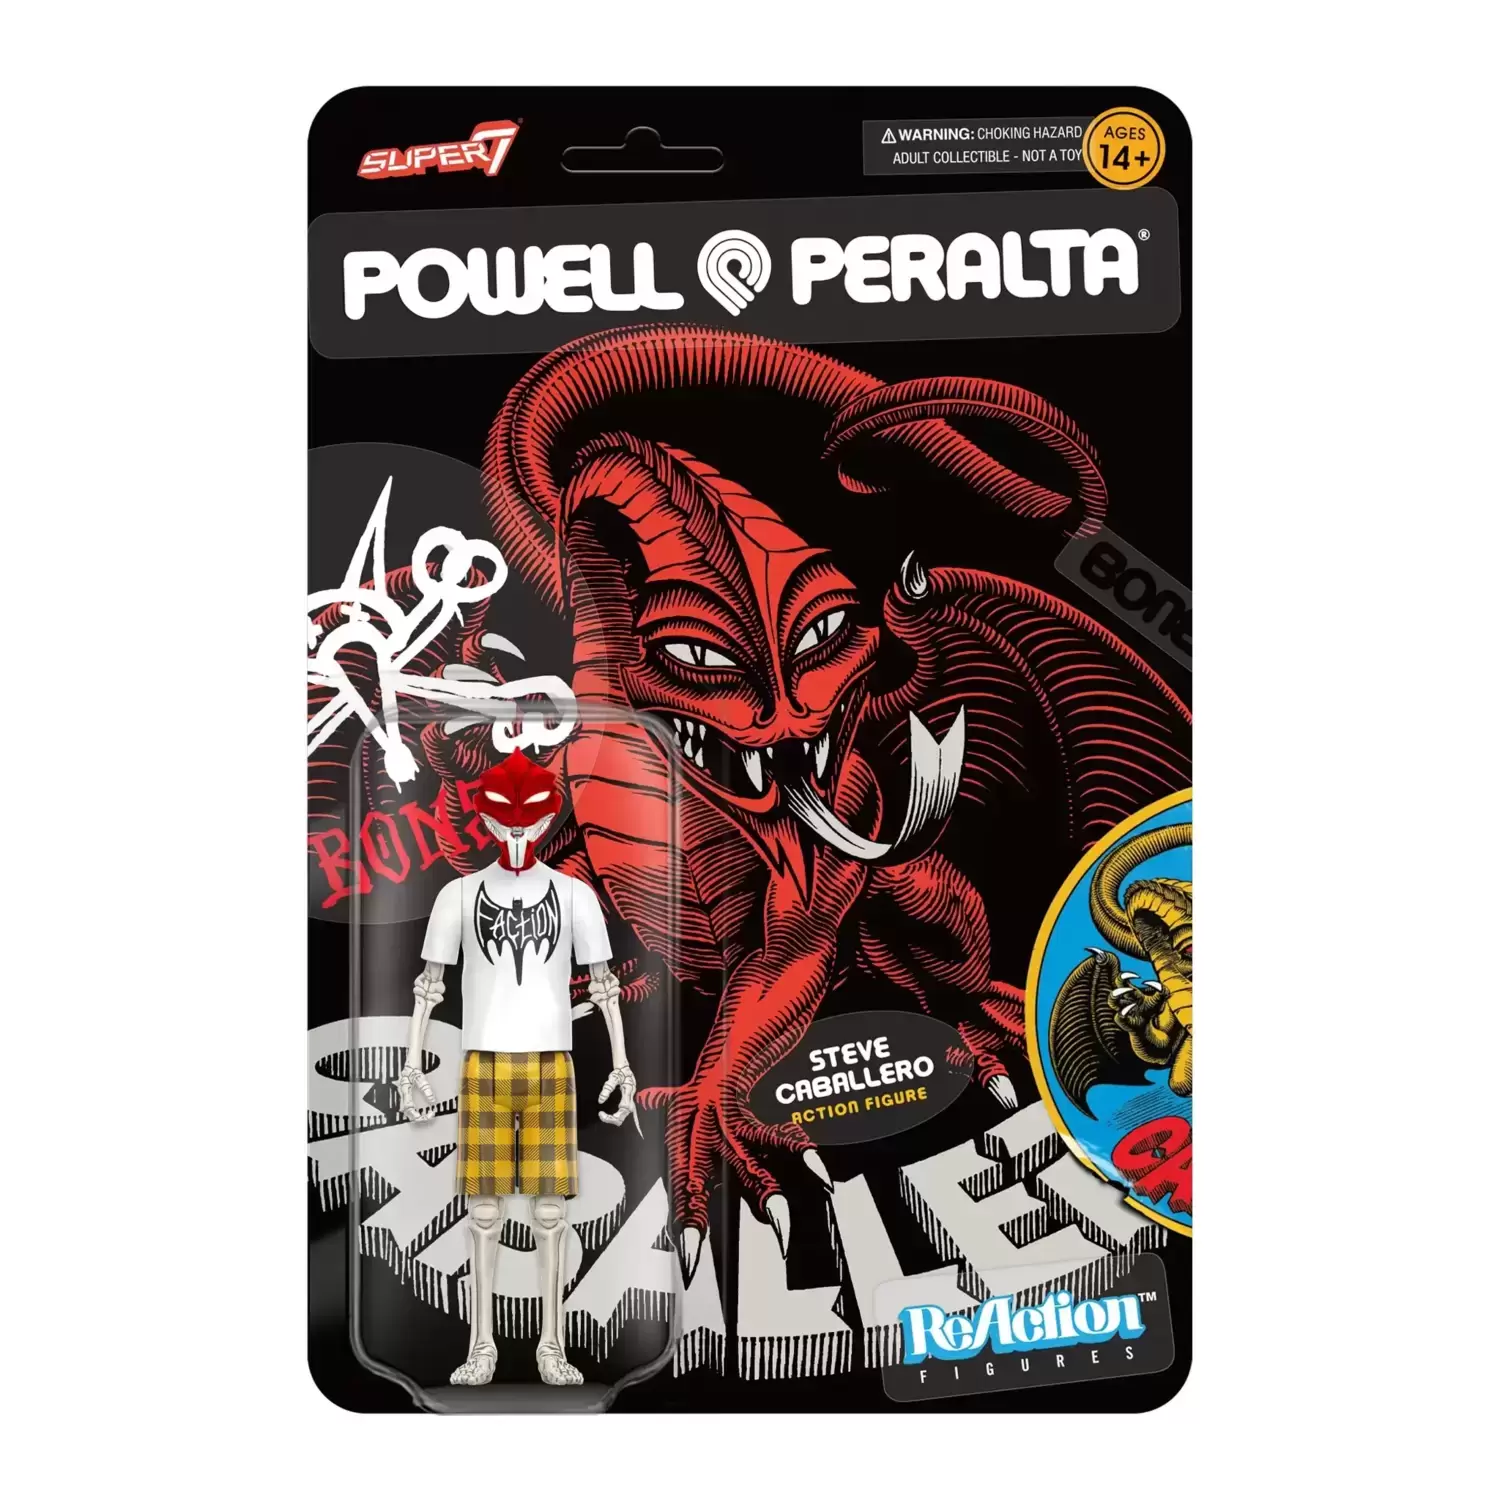 ReAction Figures - Powell-Peralta - Steve Caballero Dragon